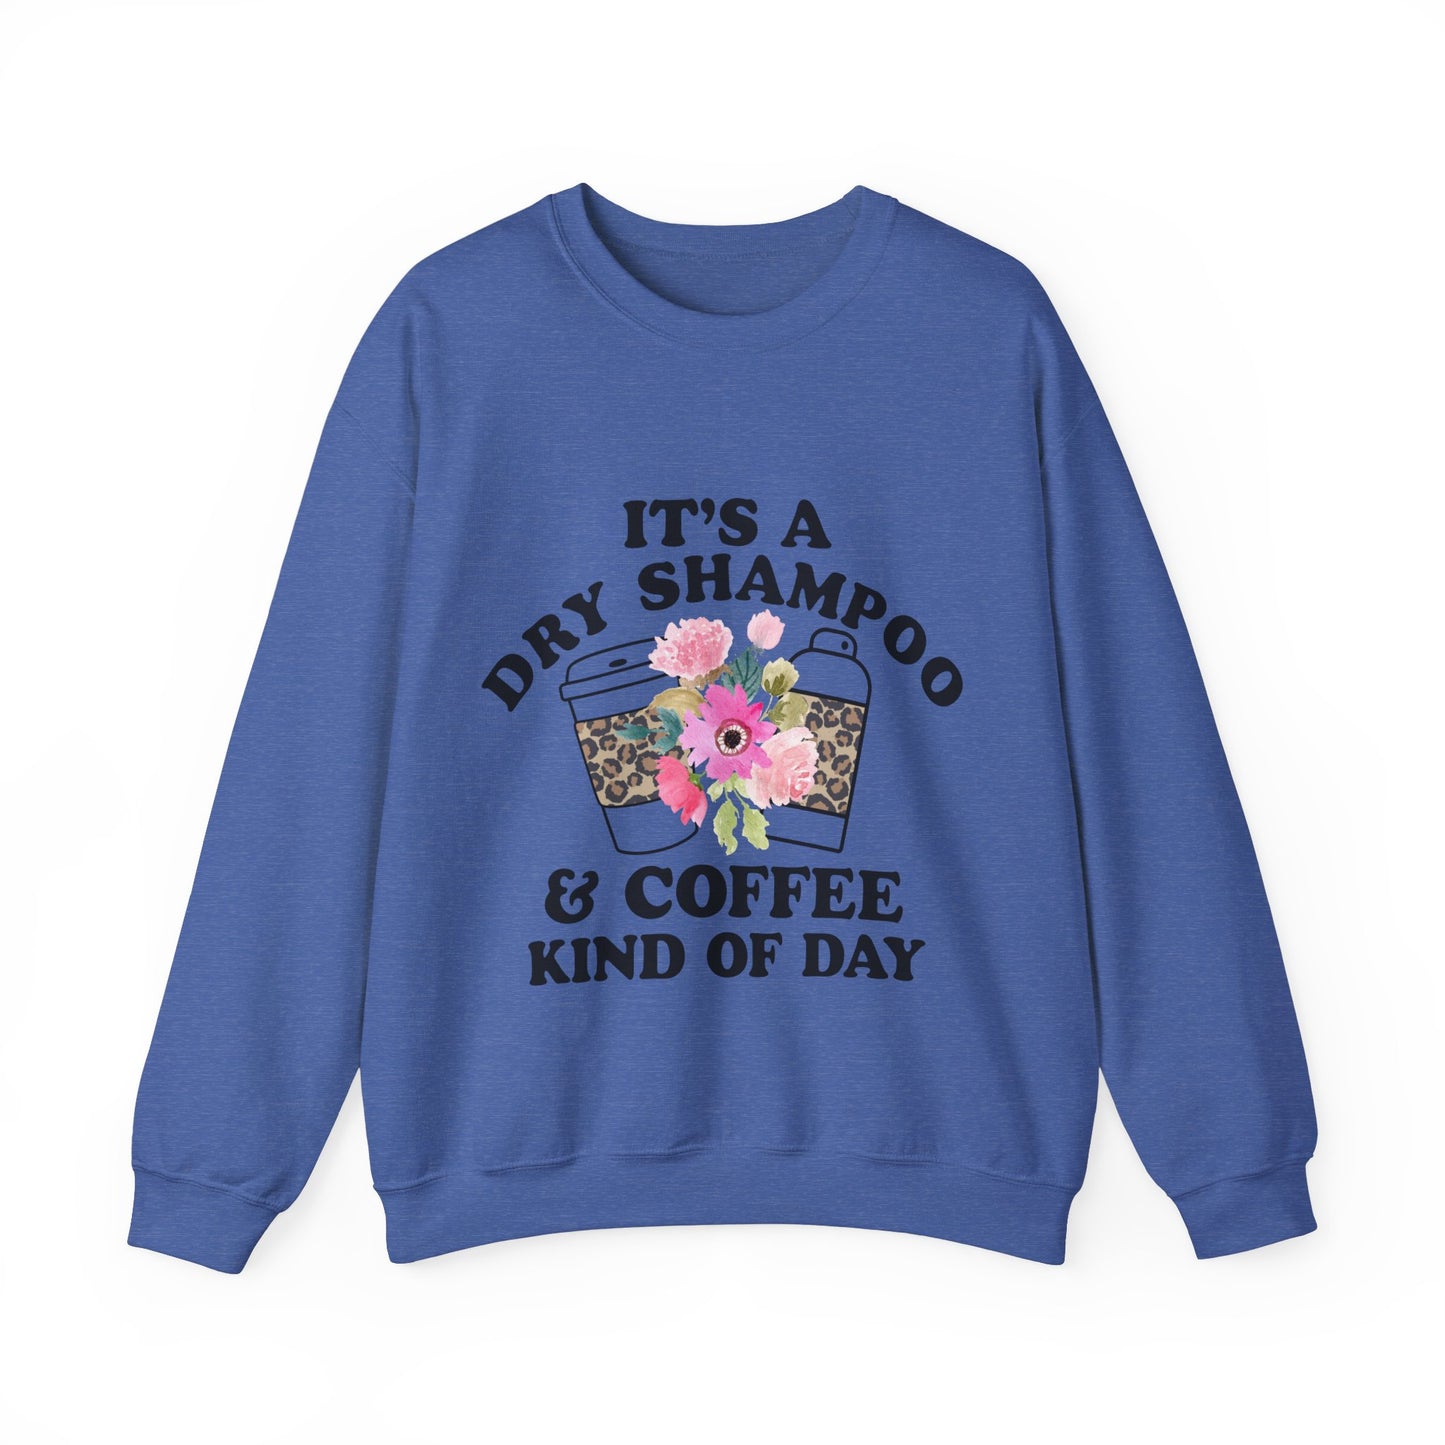 Dry Shampoo and Coffee Kind of Day Women's Crewneck Gildan Sweatshirt